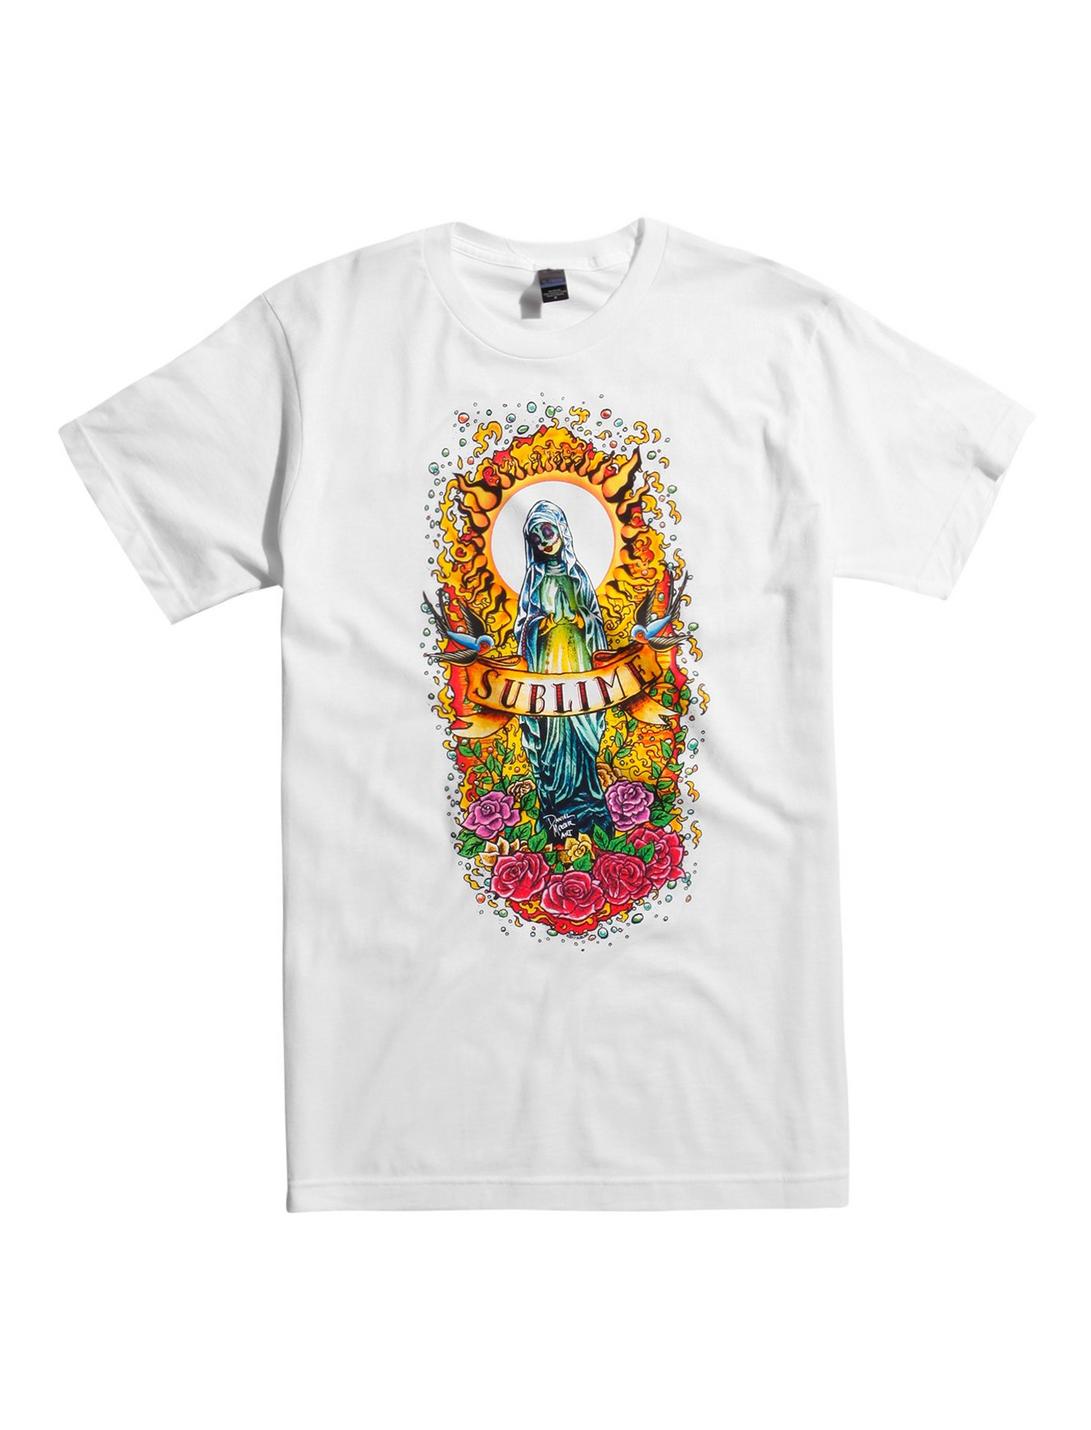 Sublime Album Mary Flowers T-Shirt, WHITE, hi-res